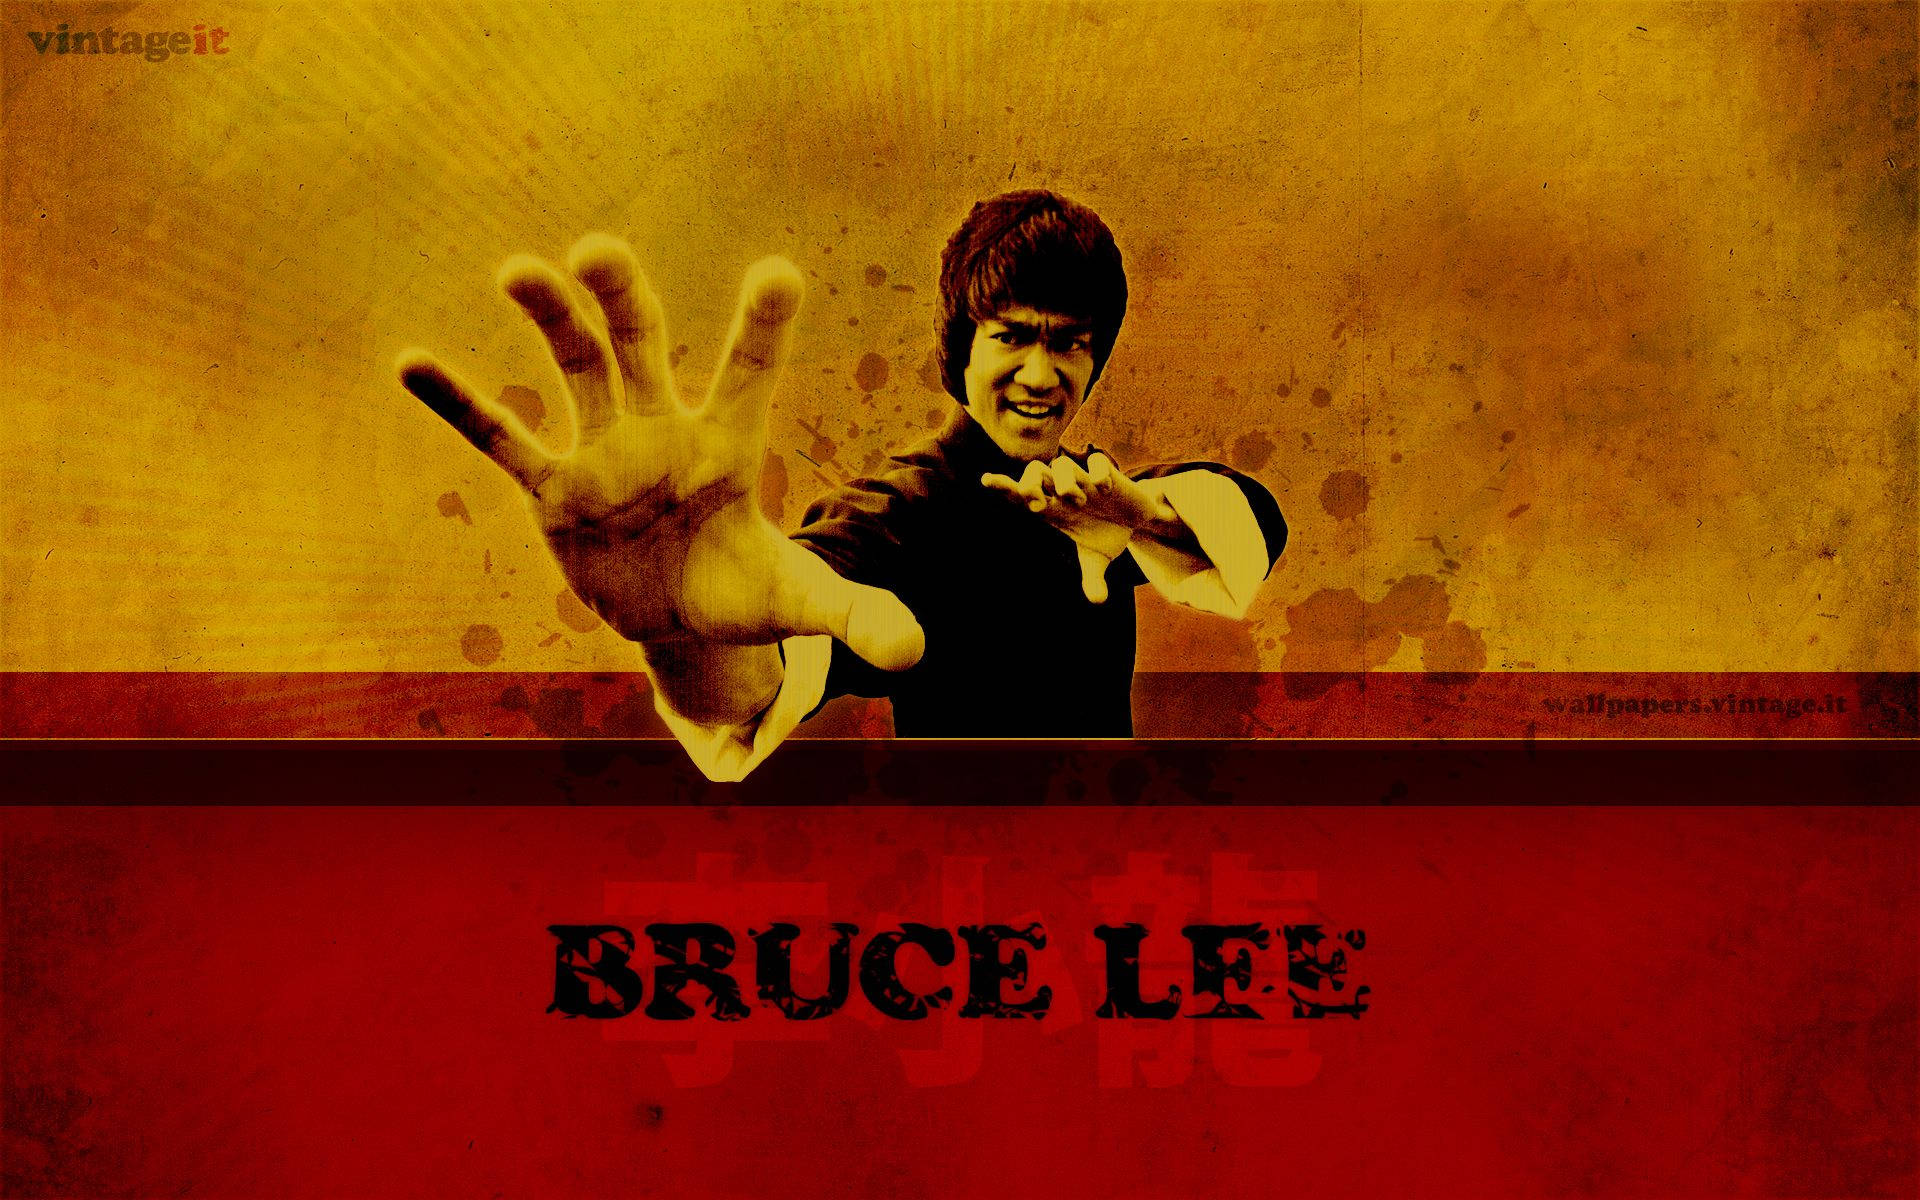 Bruce Lee Wallpaper - Free Desktop Hd Ipad Iphone Wallpaper Picture